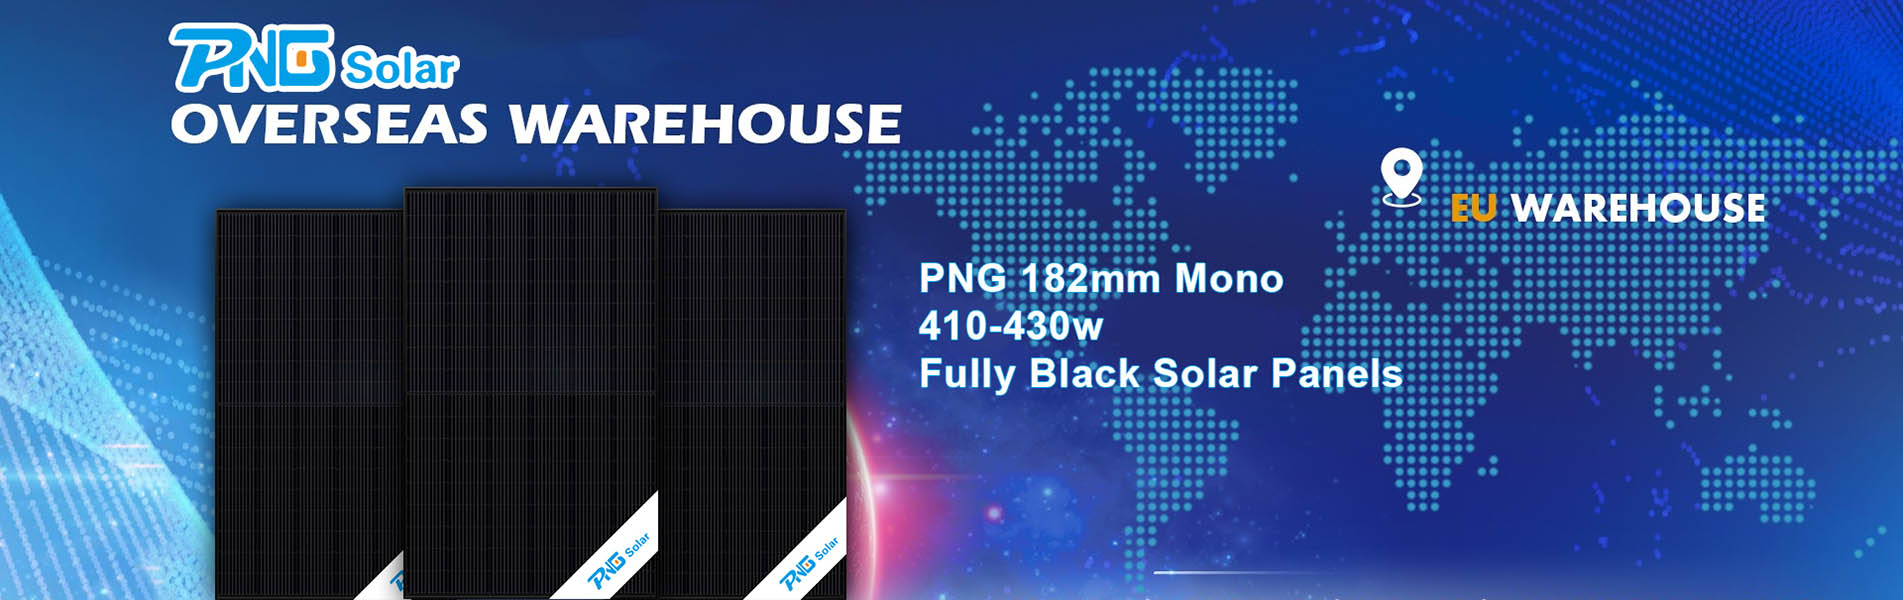 Mono Fully Black Solar Panels